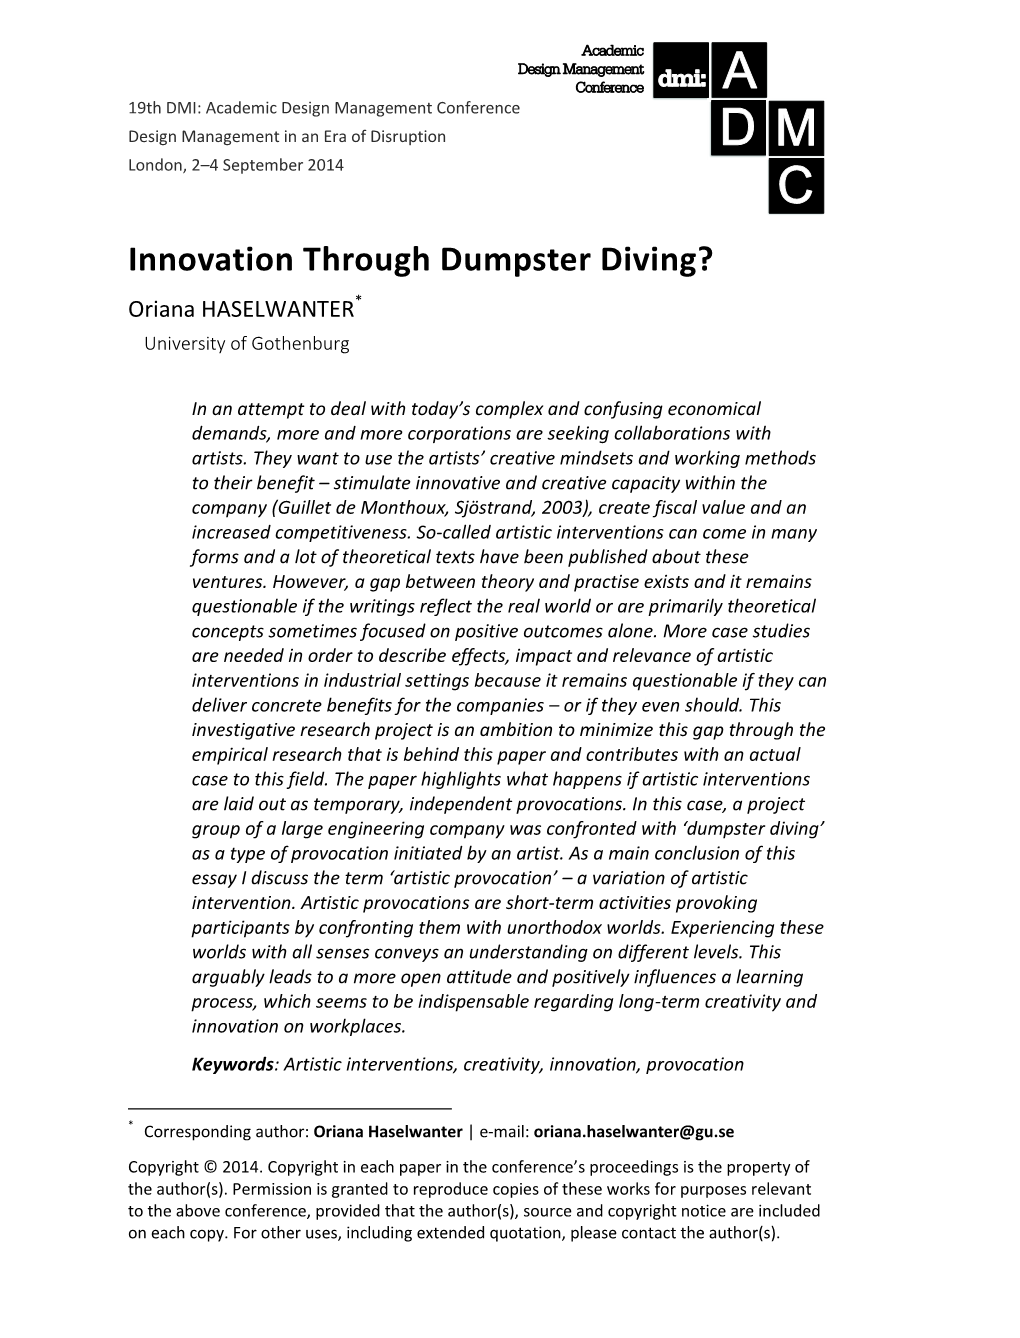 Innovation Through Dumpster Diving? Oriana HASELWANTER* University of Gothenburg